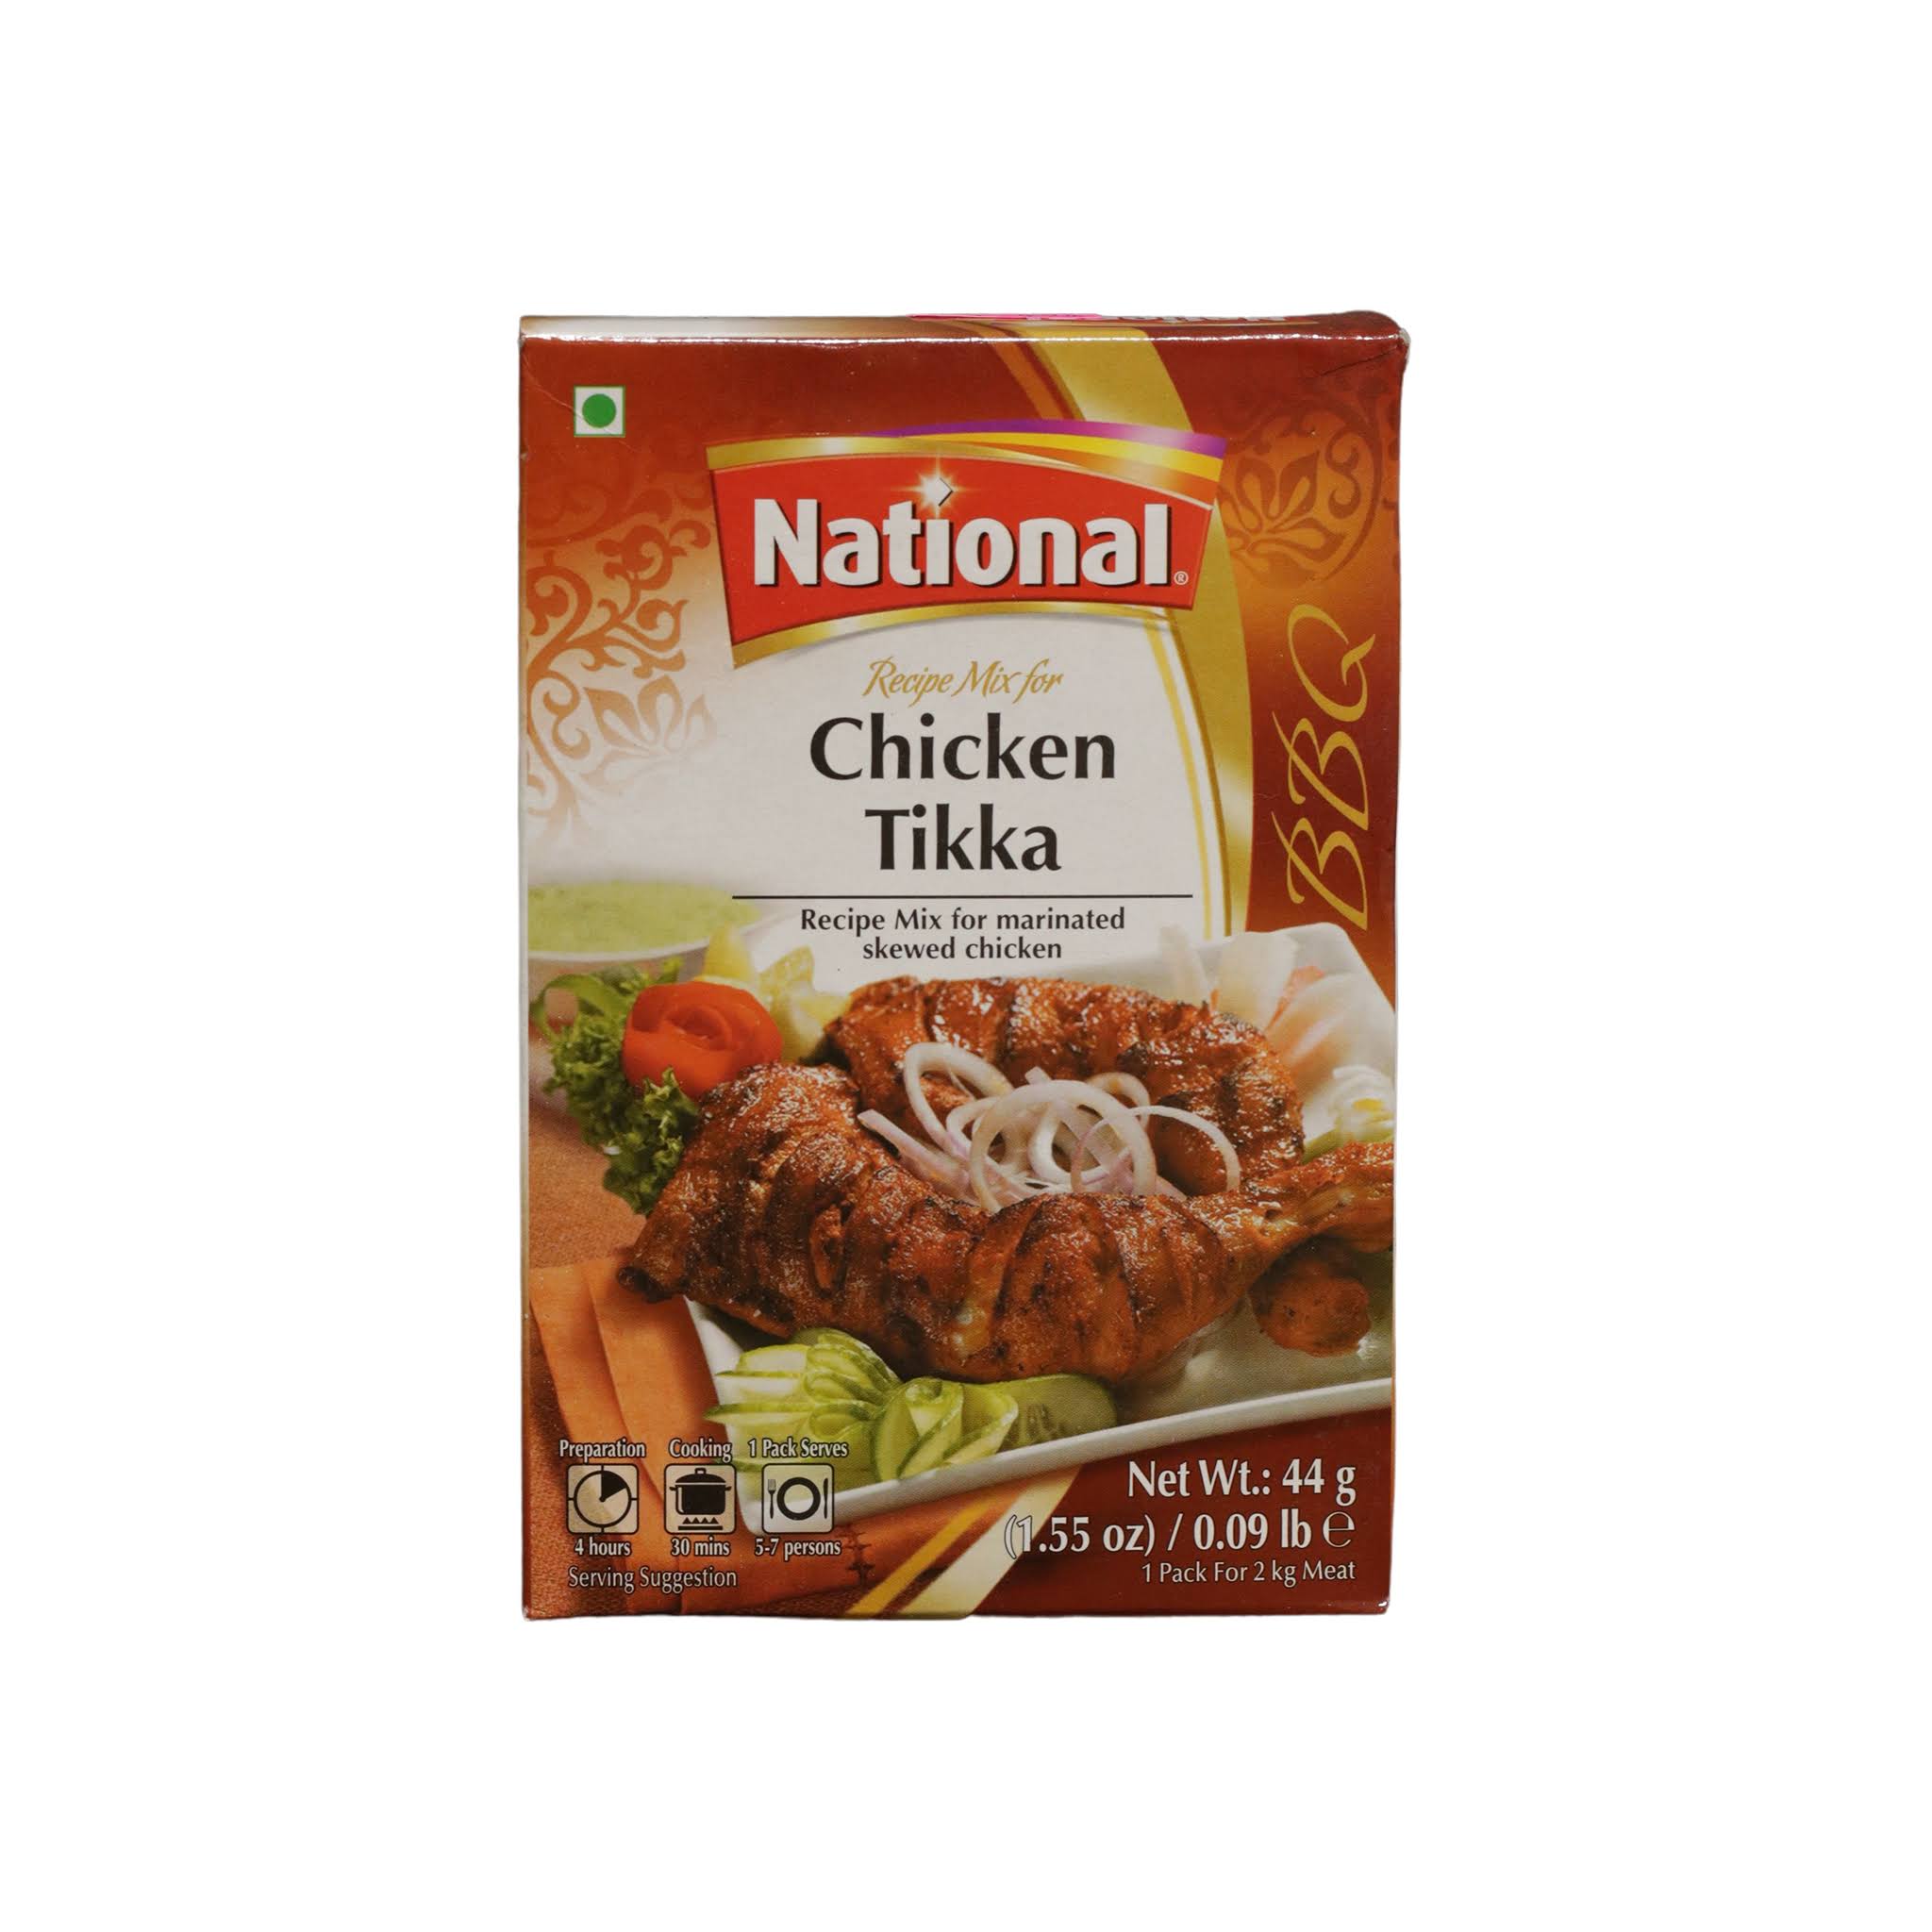 National Chicken Tikka | Grocery Delivery Service | SaveCo Online Ltd